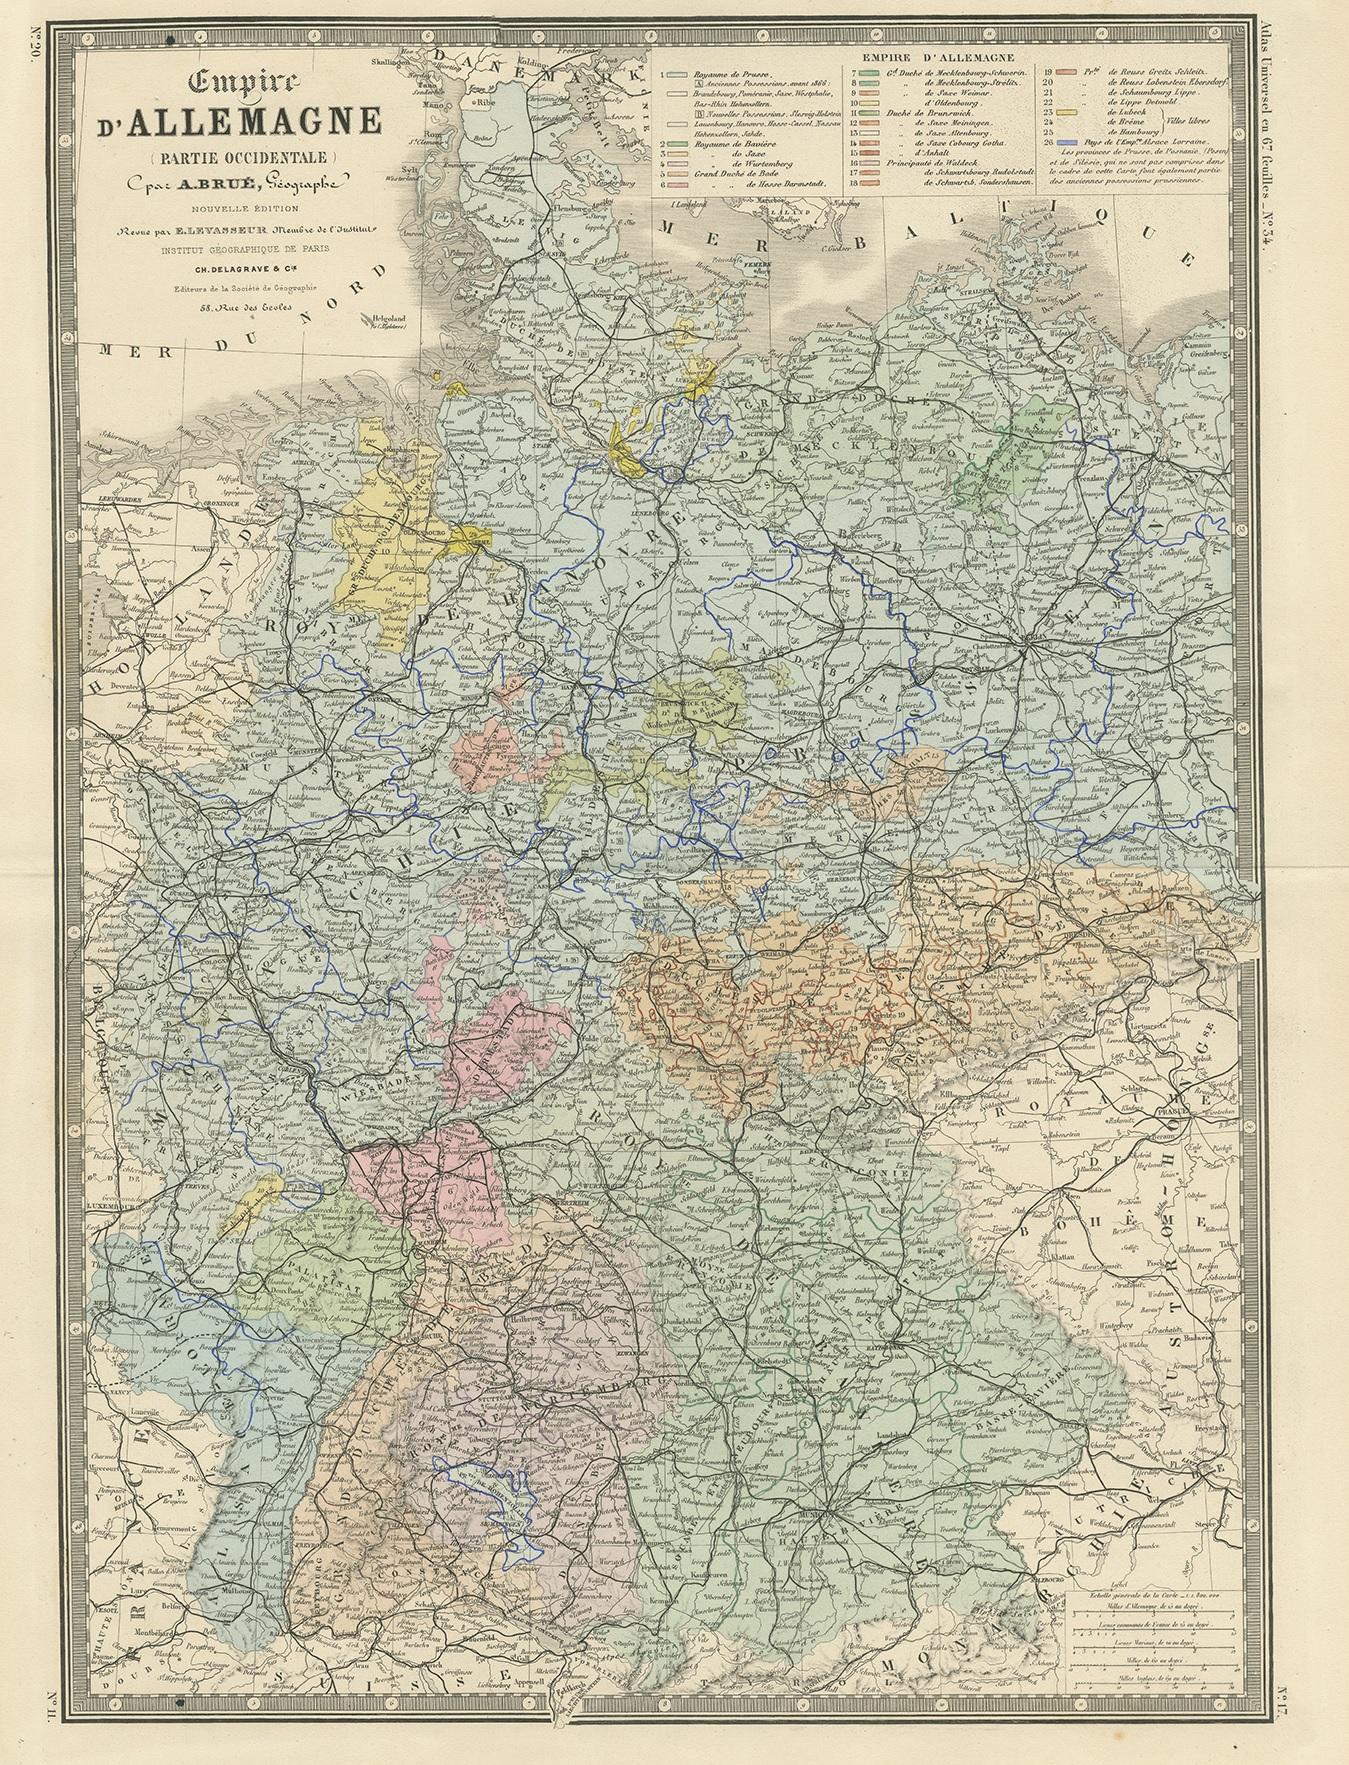 Antique map titled 'Empire d'Allemagne (..)'. Large map of the western part of the German Empire. This map originates from 'Atlas de Géographie Moderne Physique et Politique' by A. Levasseur. Published 1875.